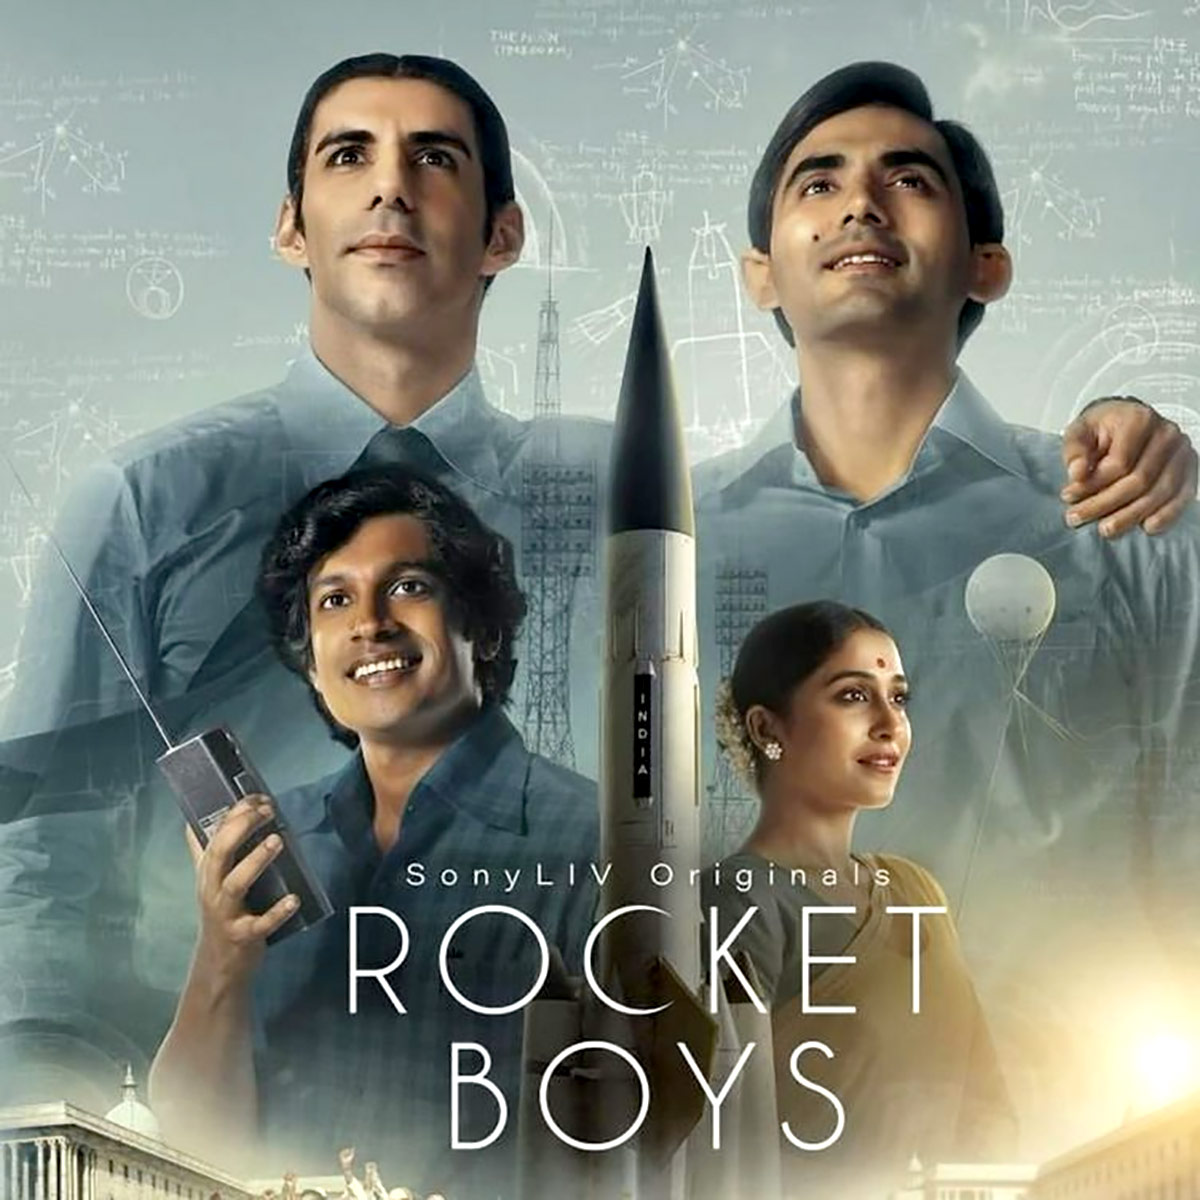 Rocket Boys poster.